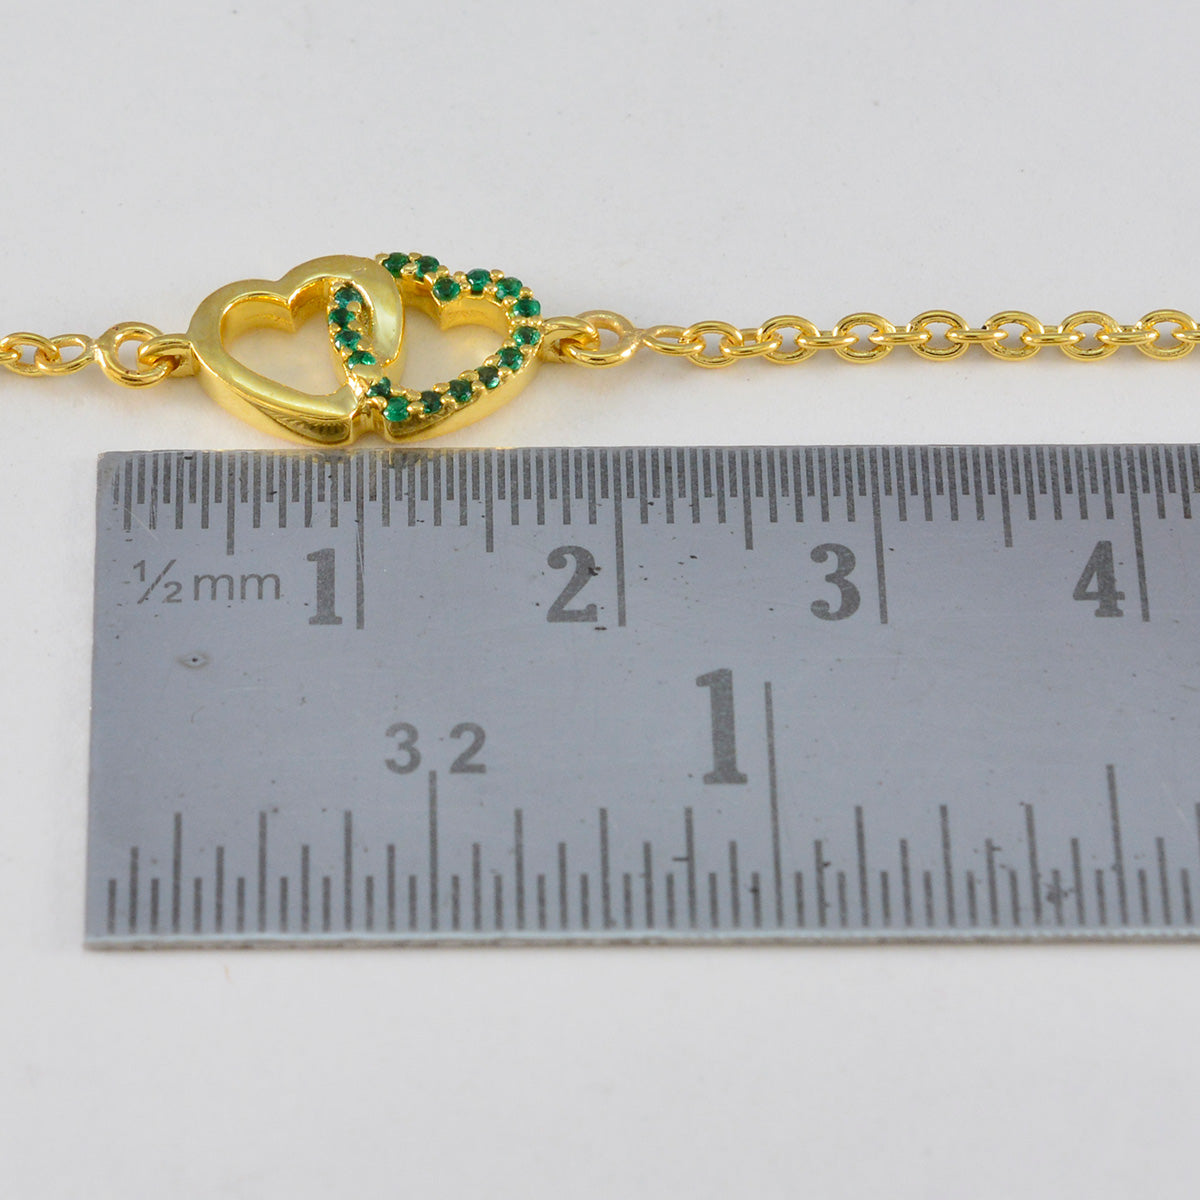 Riyo Vintage 925 Sterling Silver With Gold Plated Bracelet For Girl Emerald CZ Bracelet Bezel Setting Bracelet with Fish Hook Charm Bracelet L Size 6-8.5 Inch.